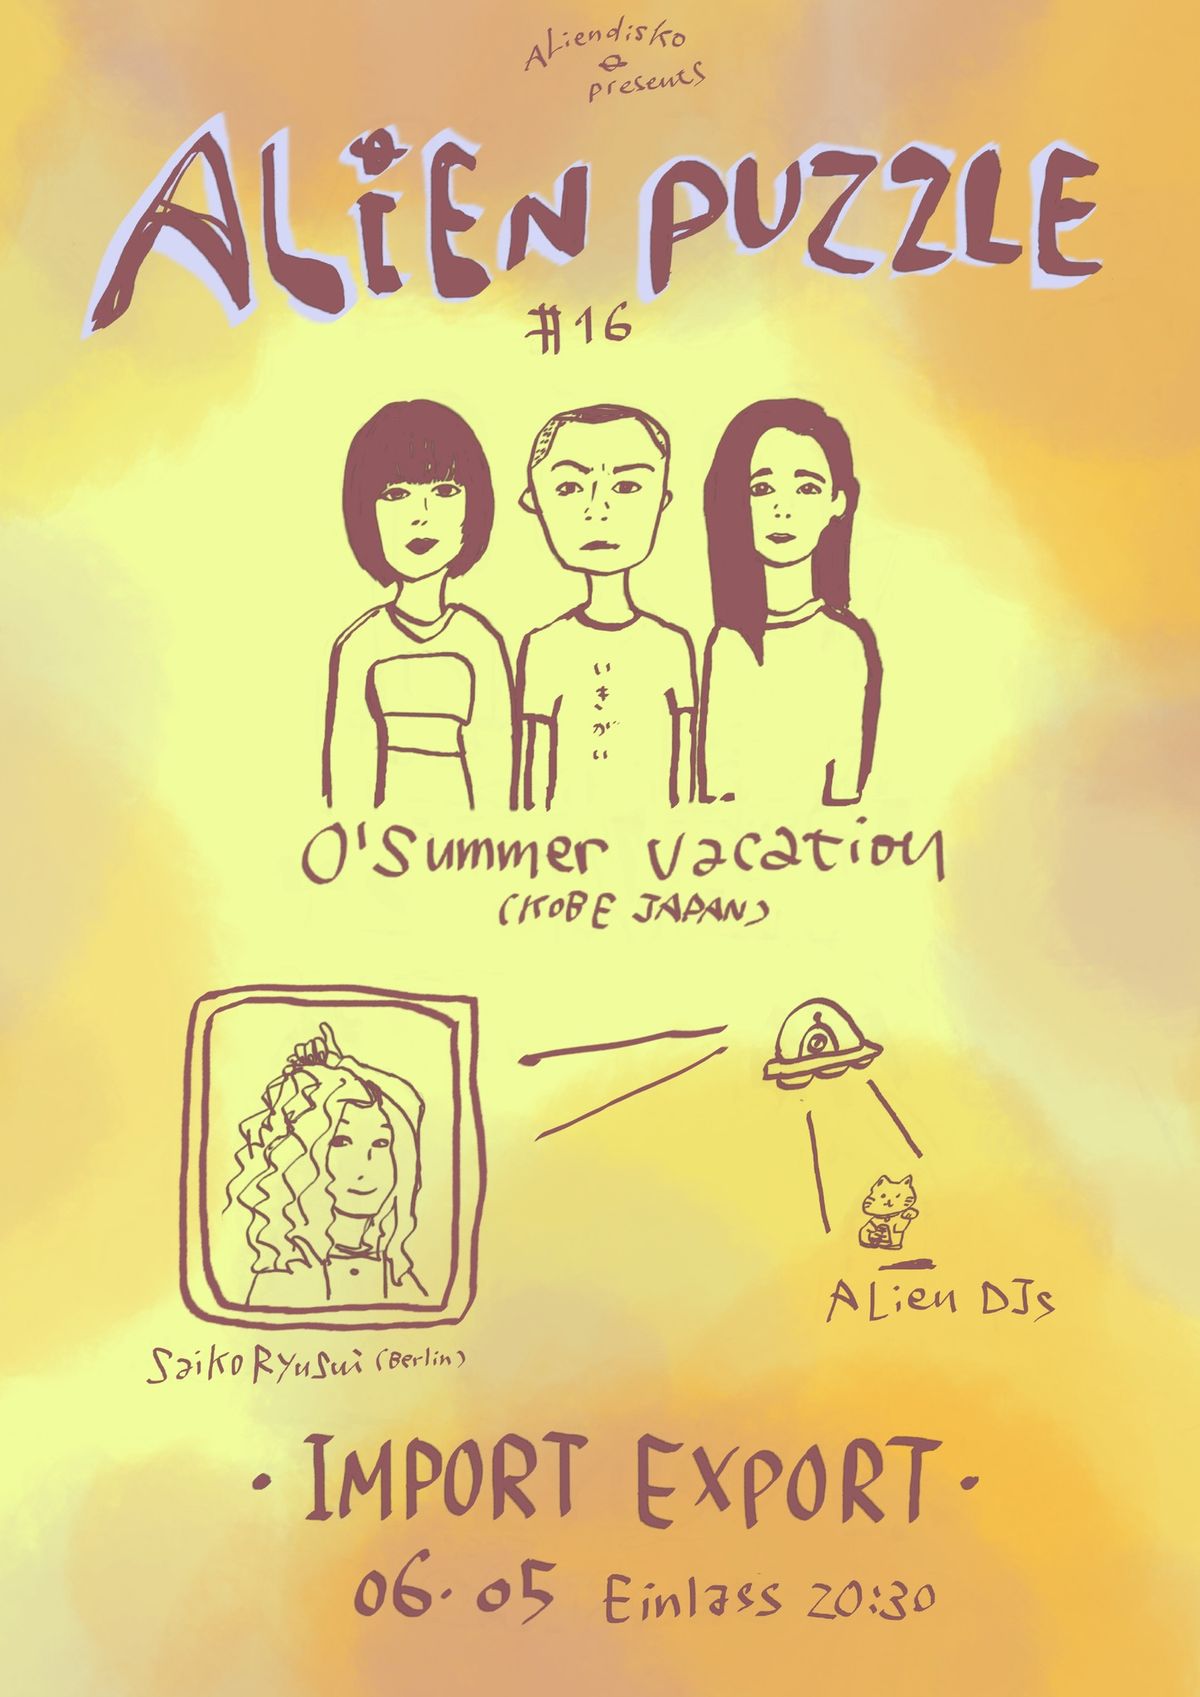 Alien Puzzle #16 - o'summer vacation + Saiko Ryusui